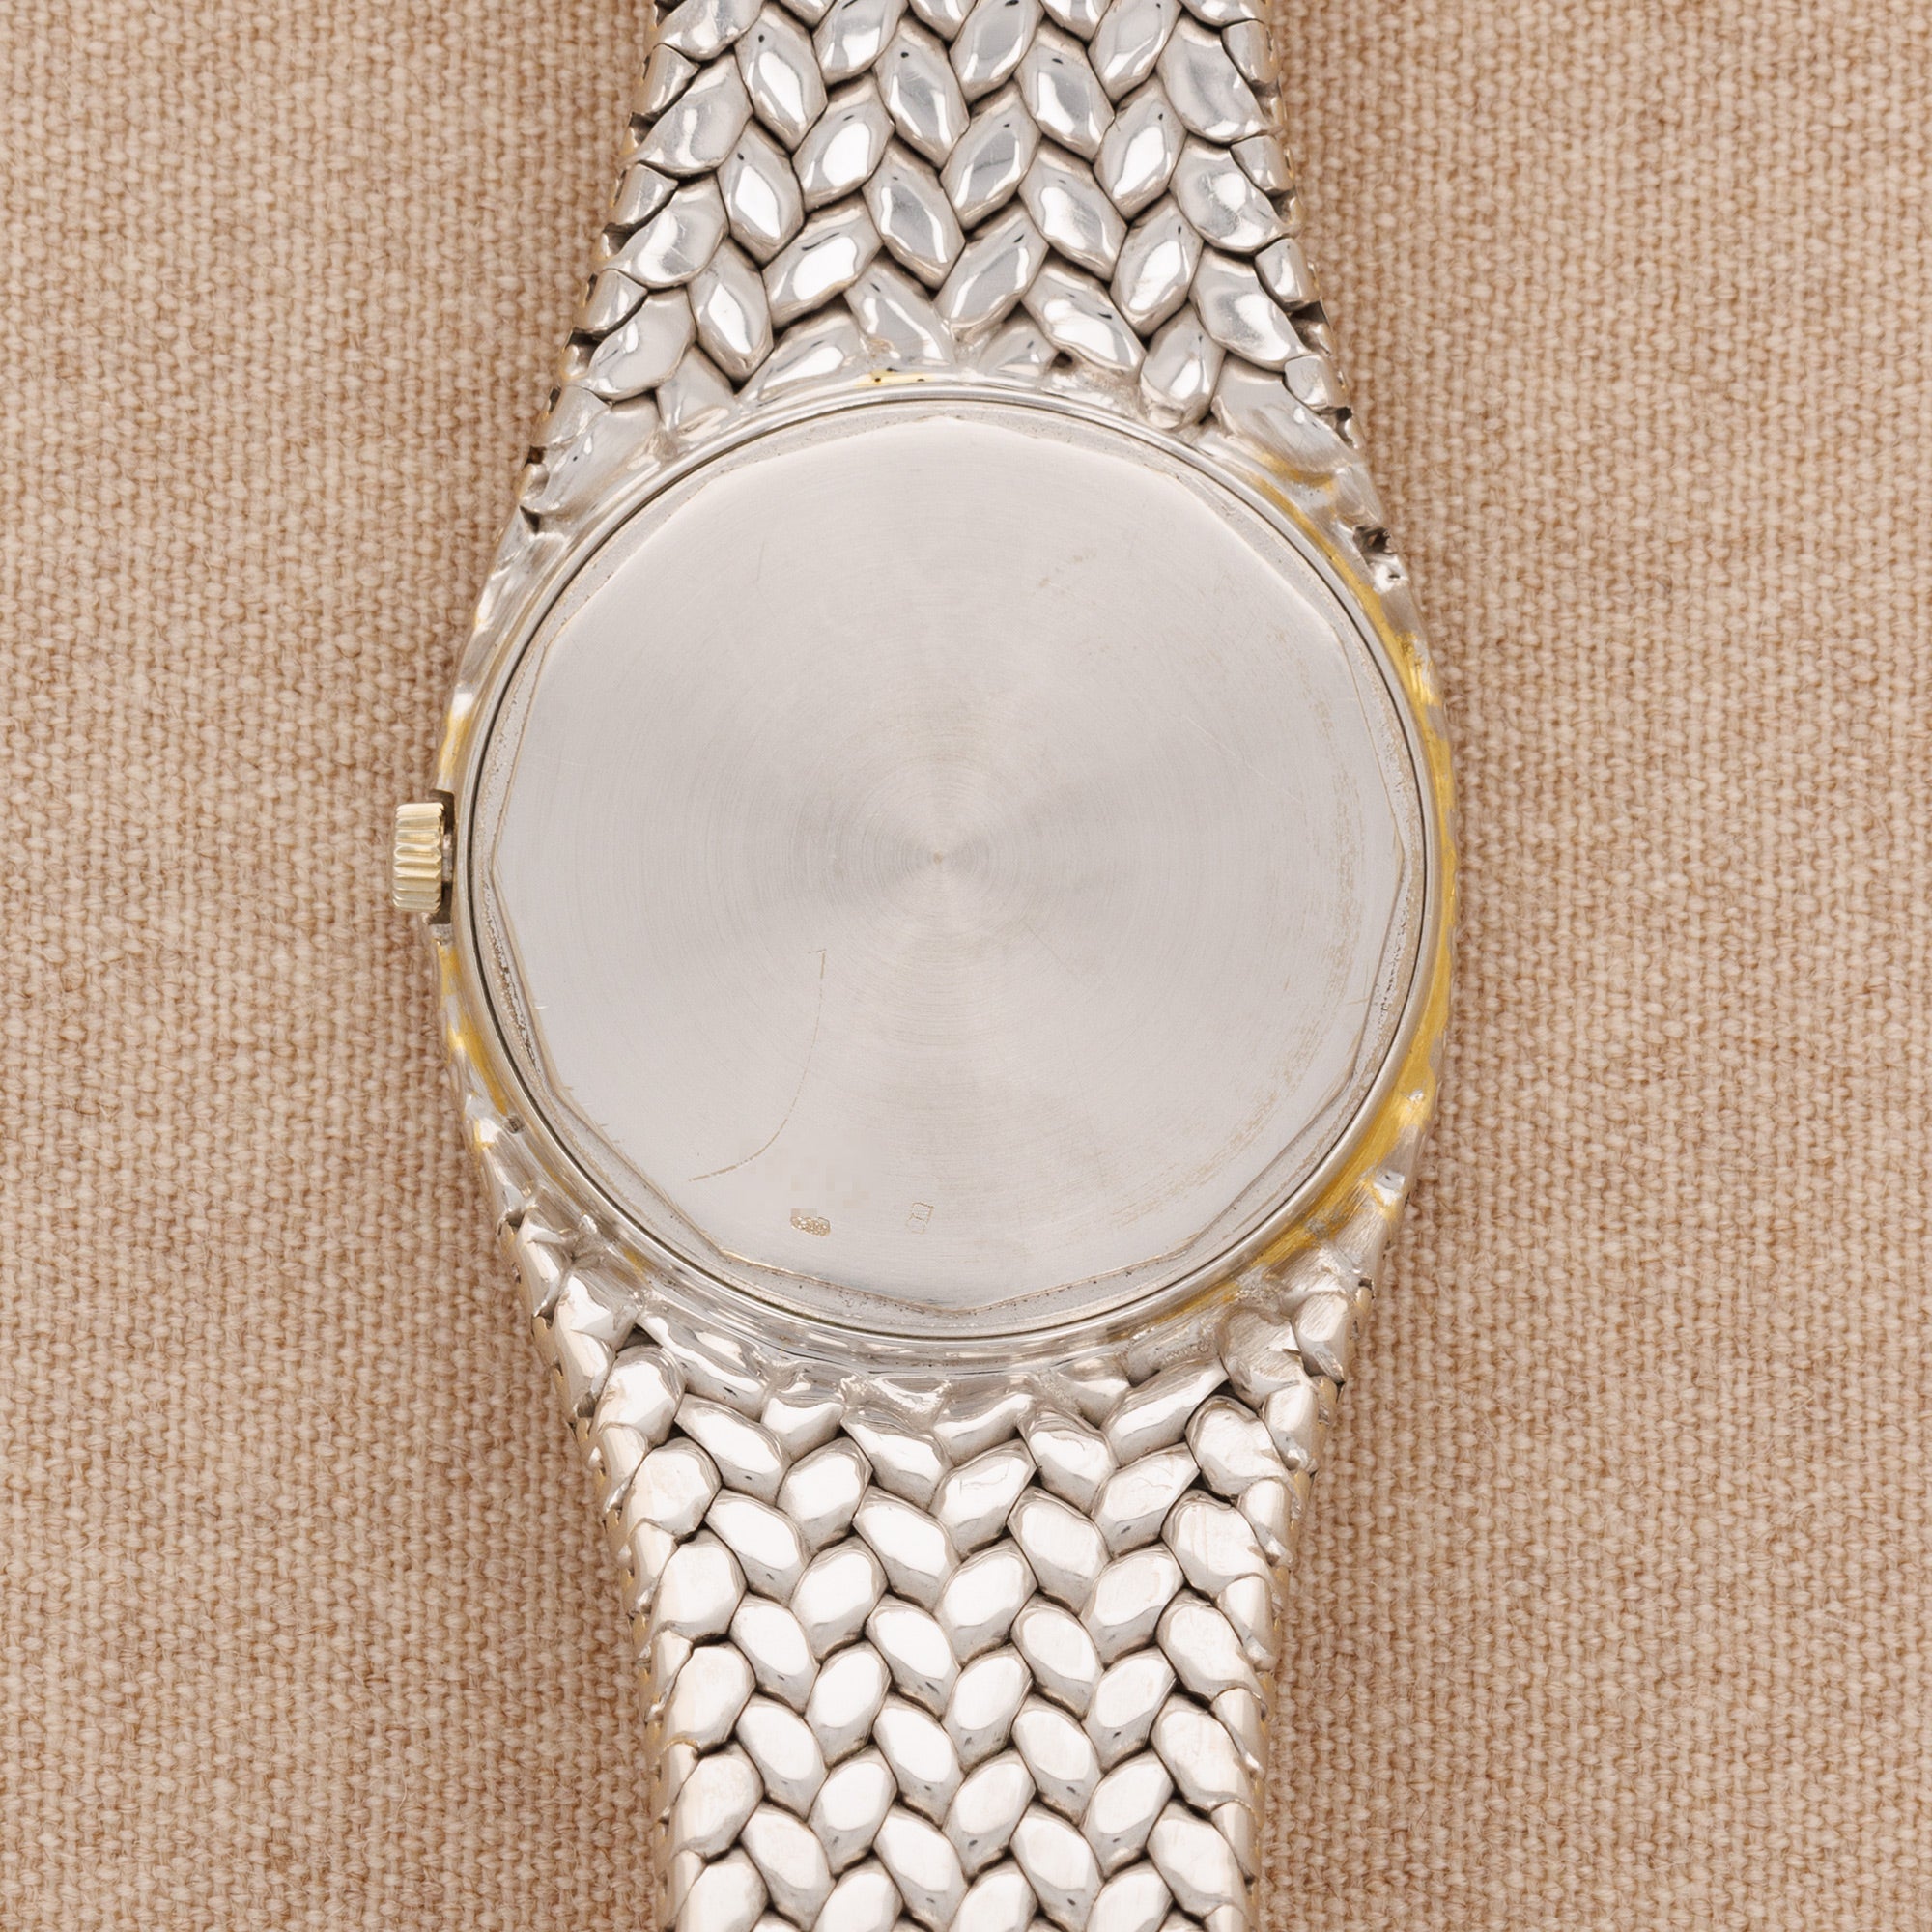 Audemars Piguet - Audemars Piguet White Gold Cobra Ref. 5403 - The Keystone Watches